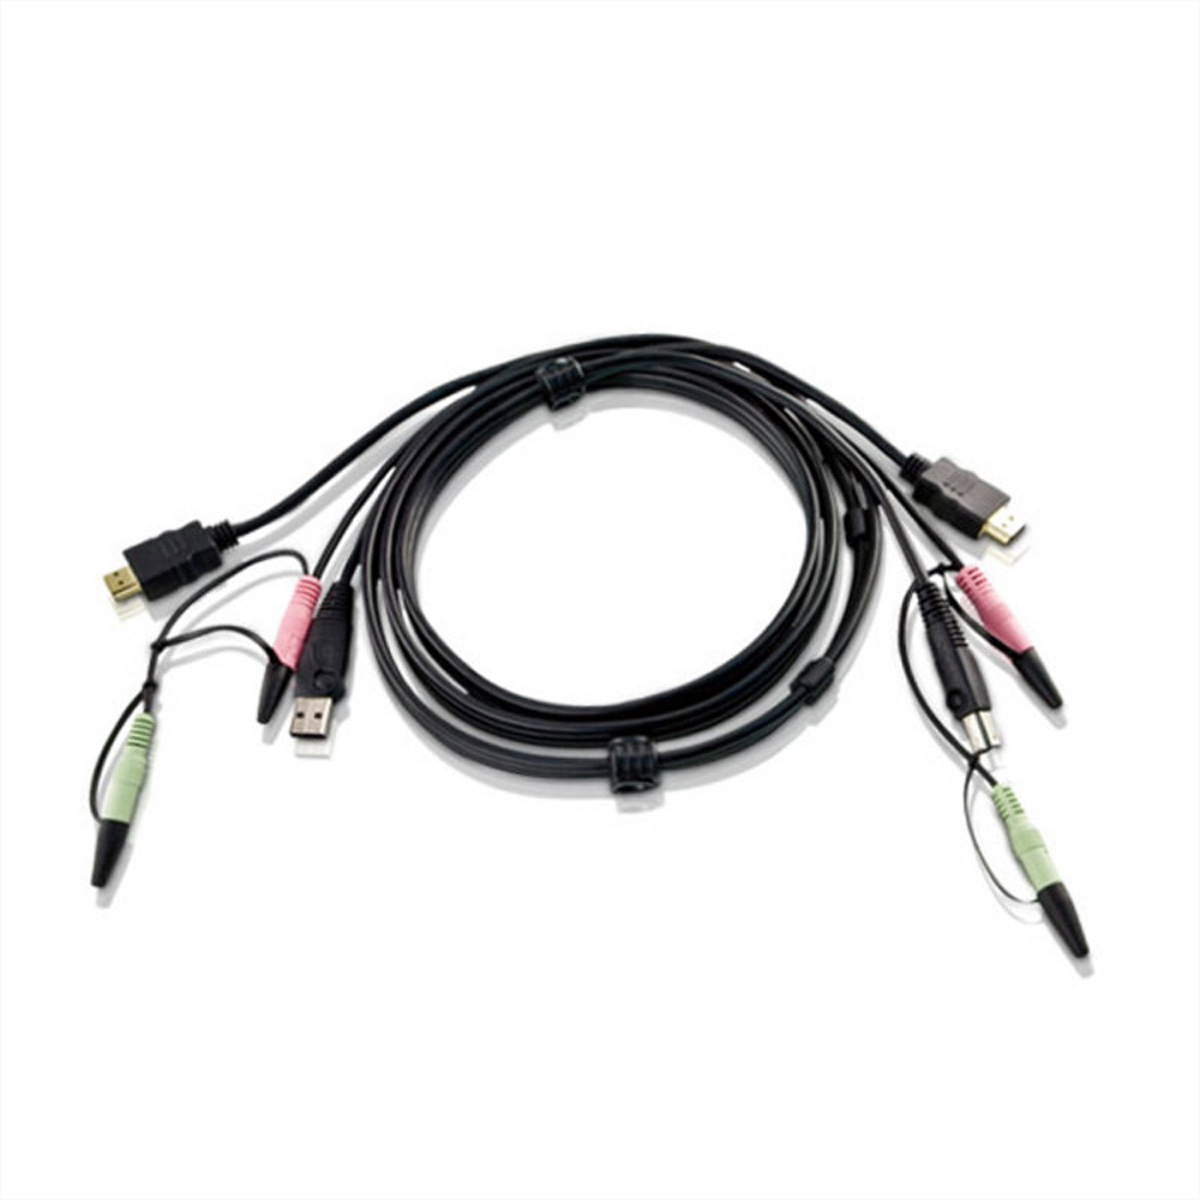 ATEN 2L-7D02UH HDMI KVM Anschlusskabel, USB 2.0, schwarz, 1,8 m